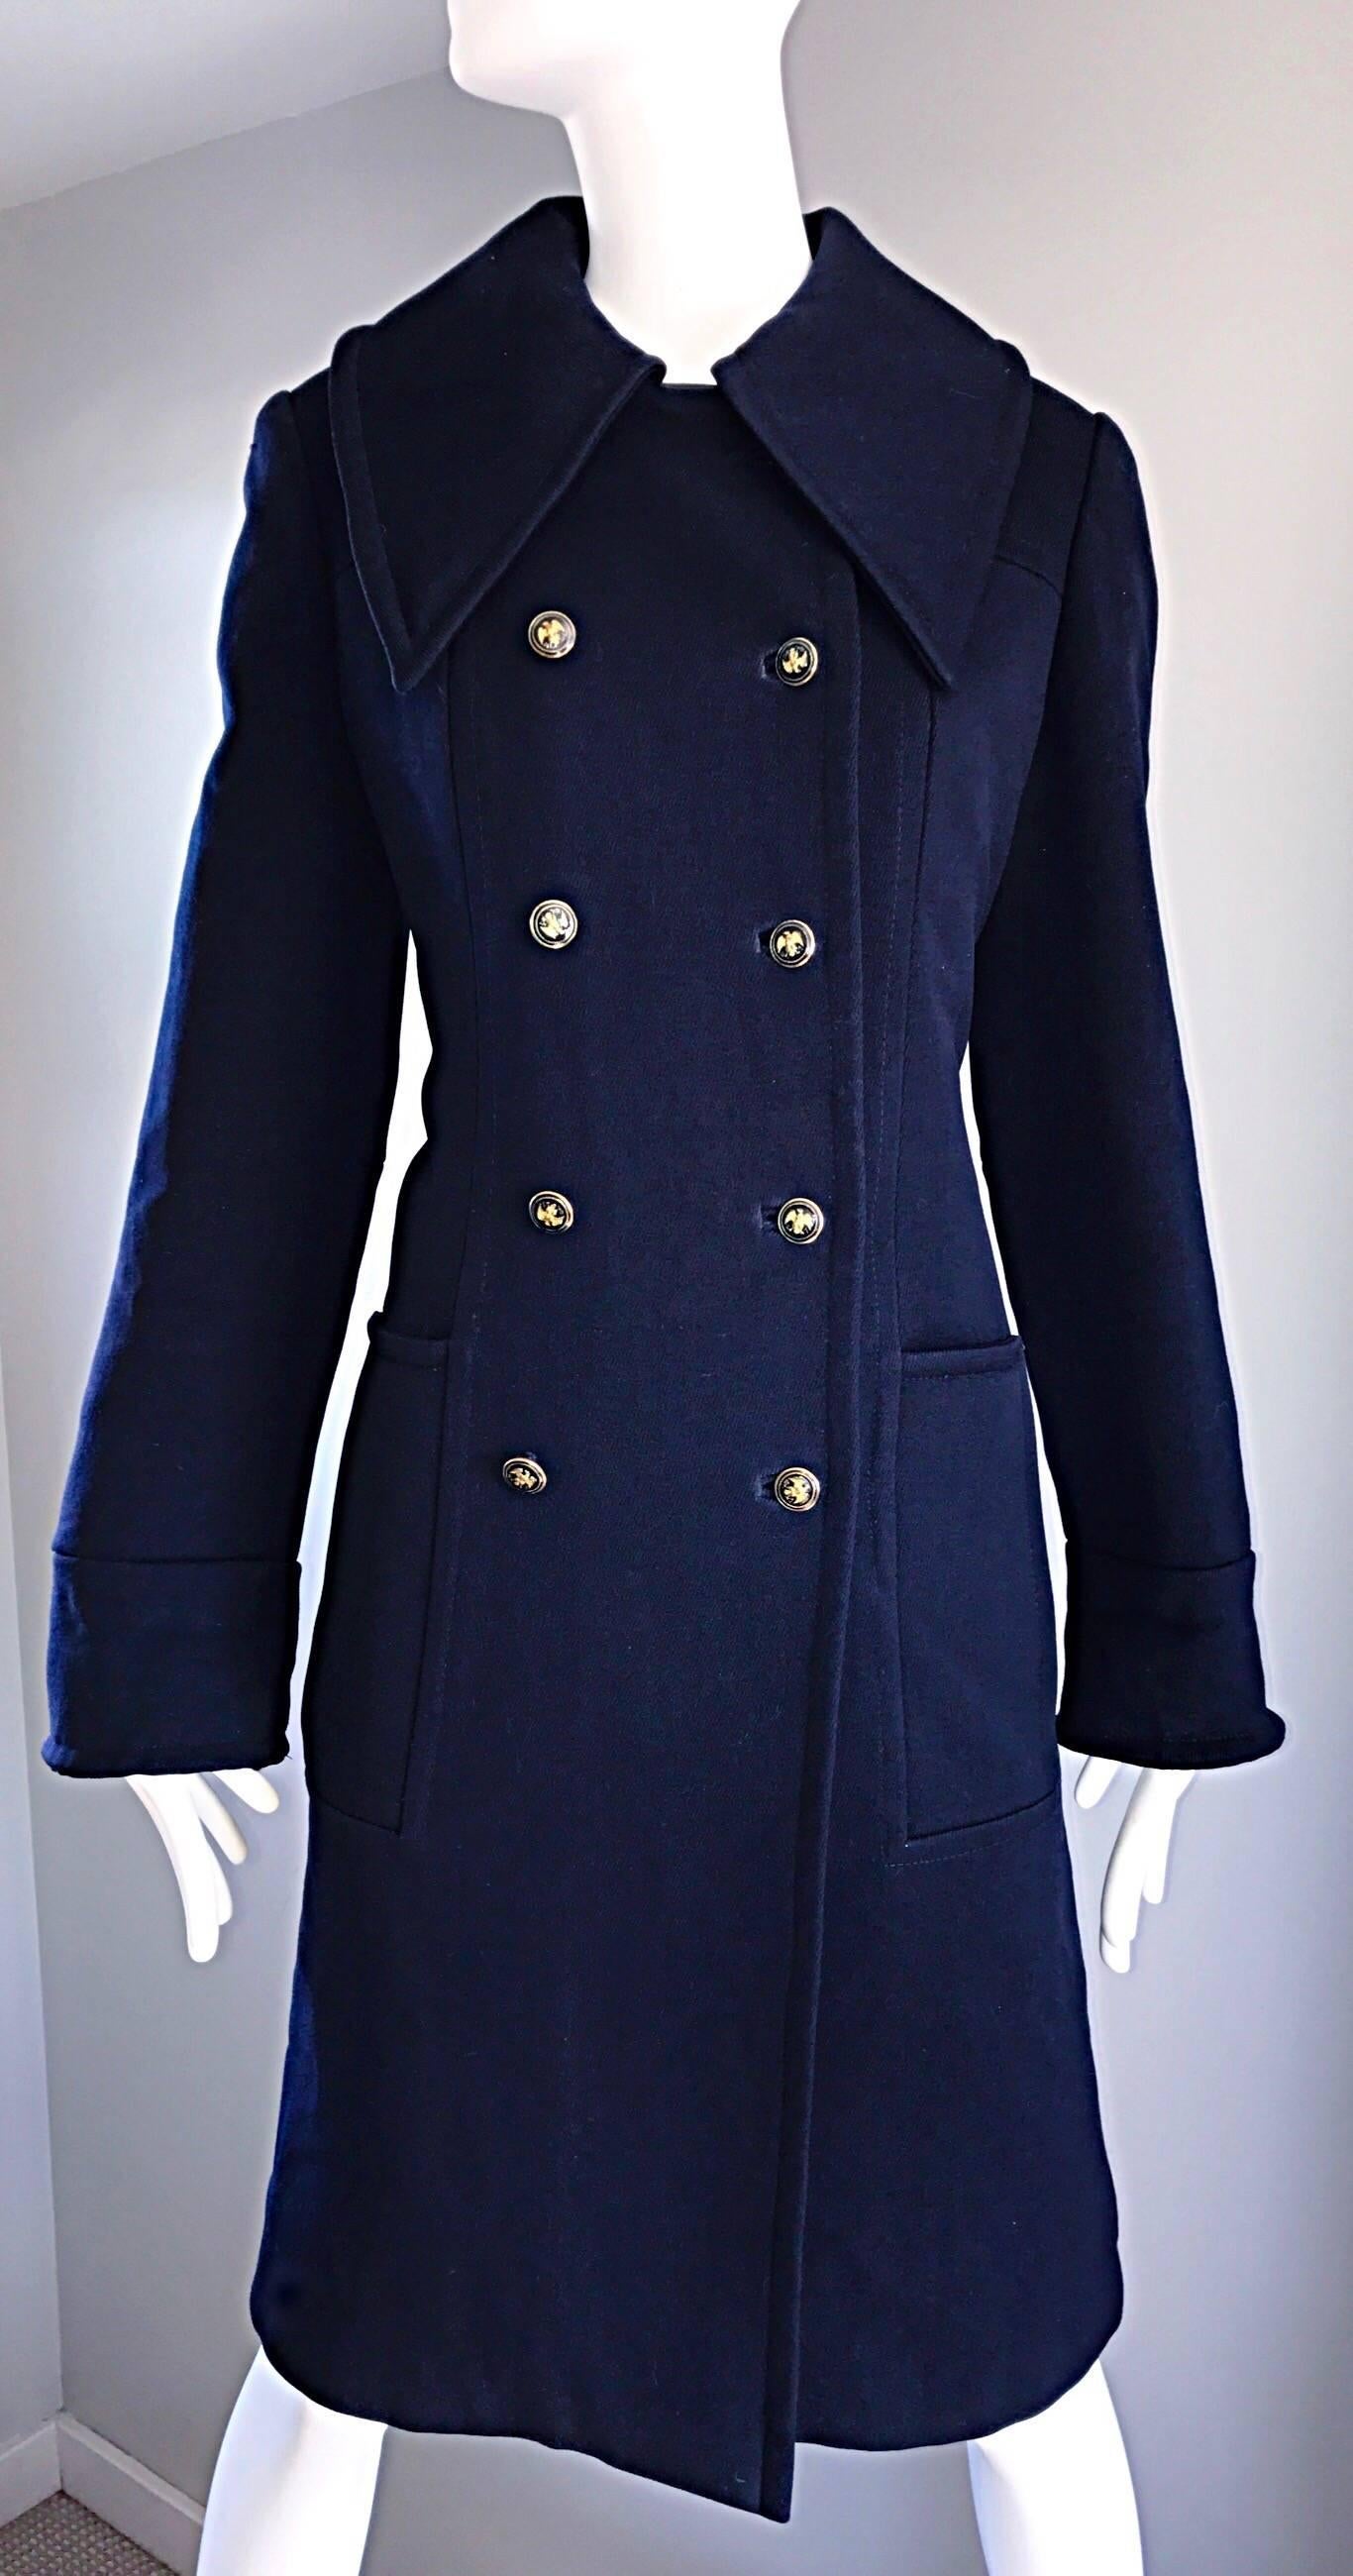 1970s SAKS 5th AVENUE Navy Blue Double Breasted Long Wool Peacoat Jacket Coat 3